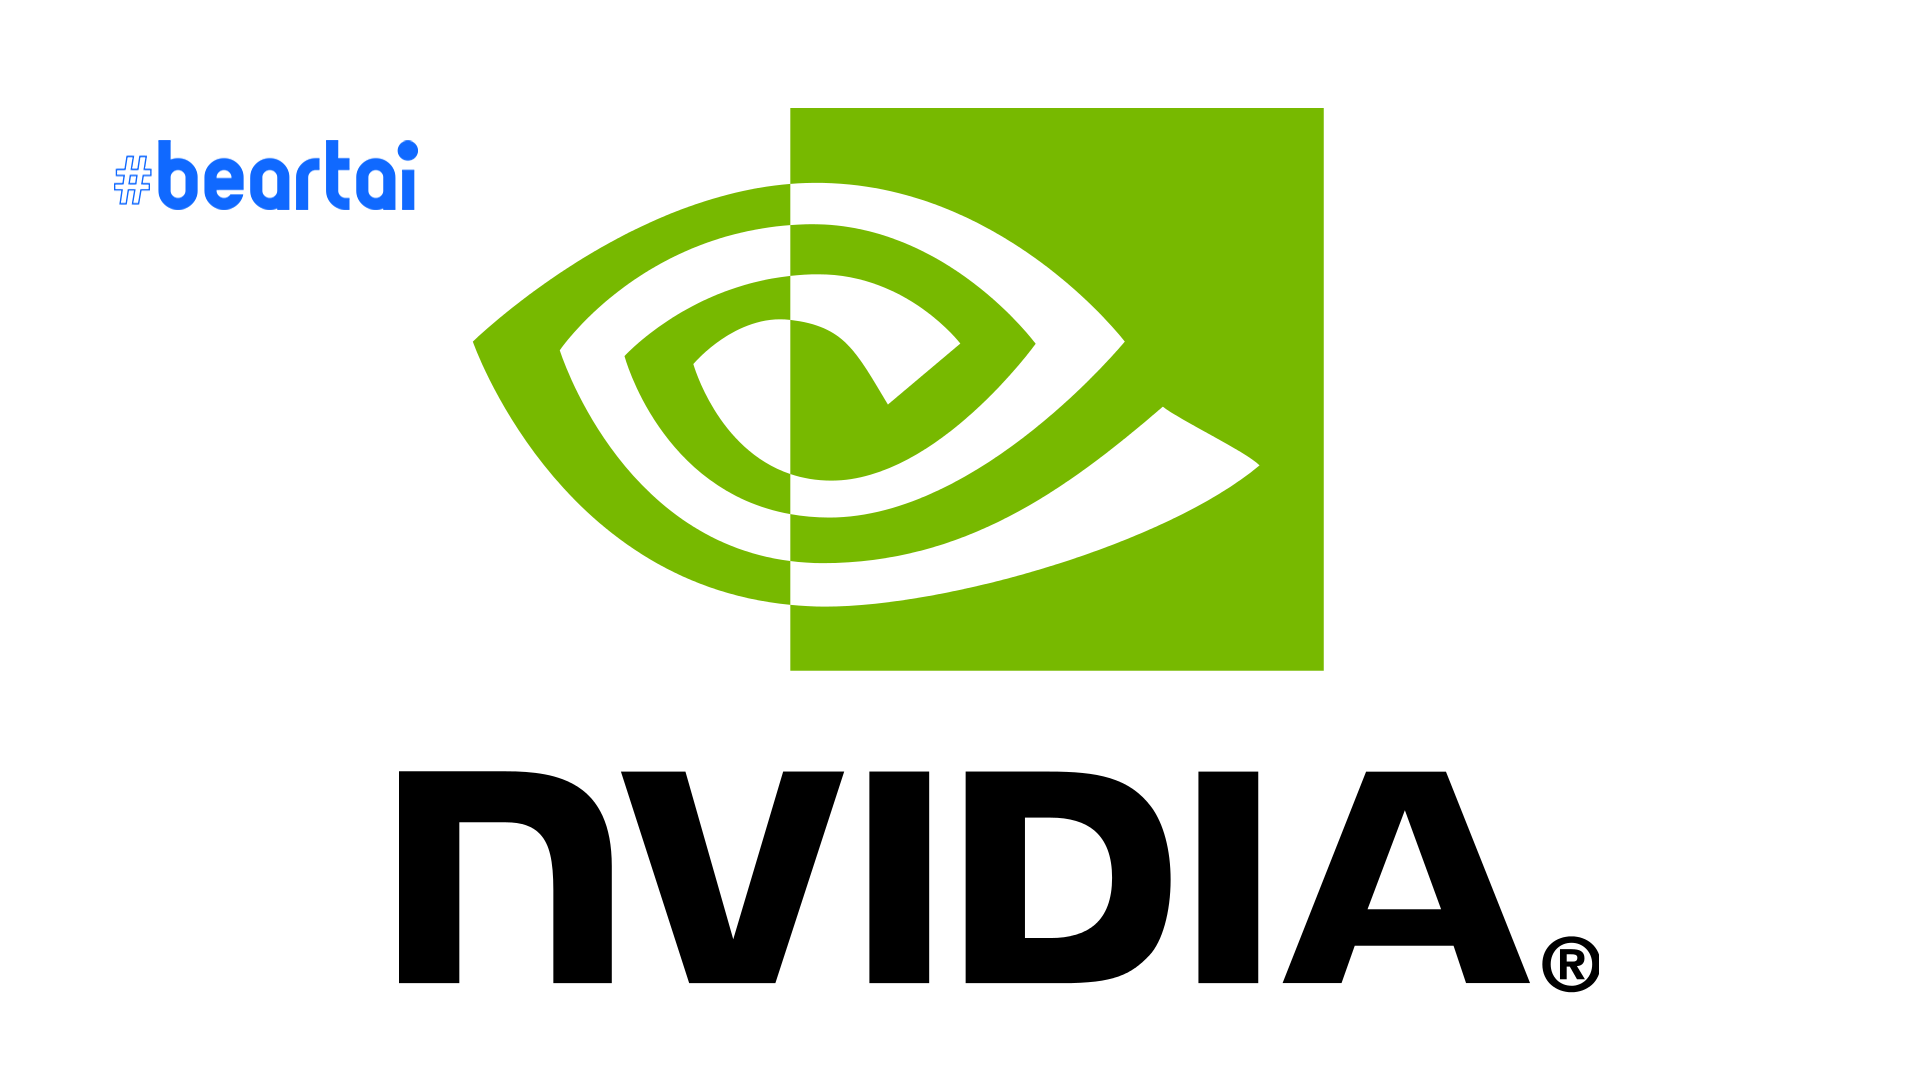 NVIDIA จะจัดการประชุม GTC ในตุลาคมนี้ผ่านออนไลน์